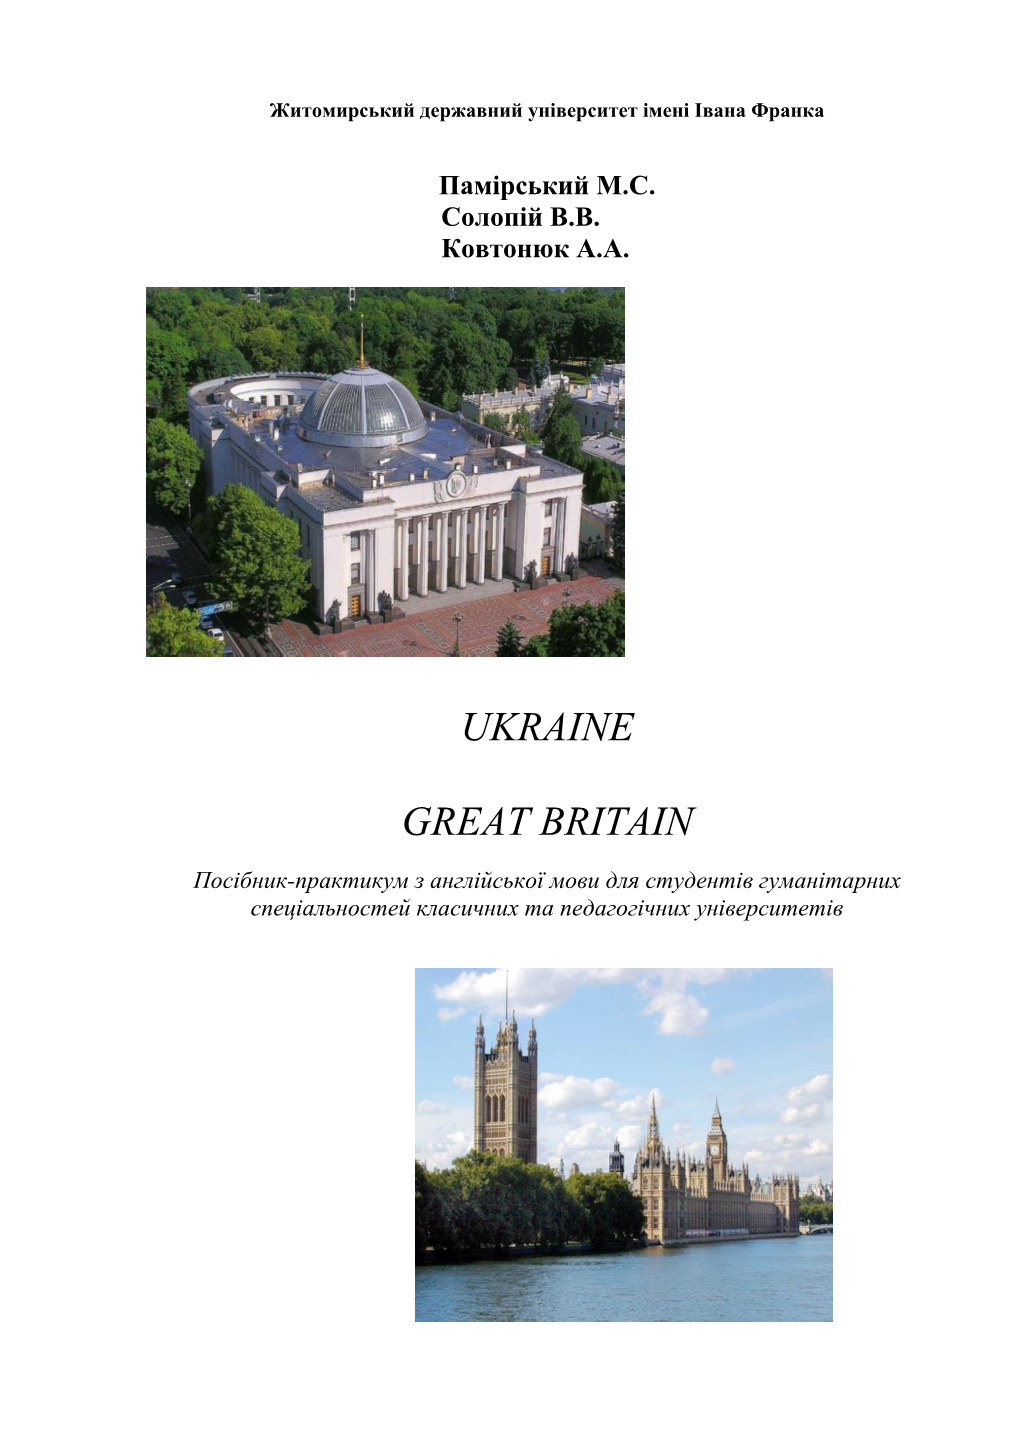 Ukraine Great Britain